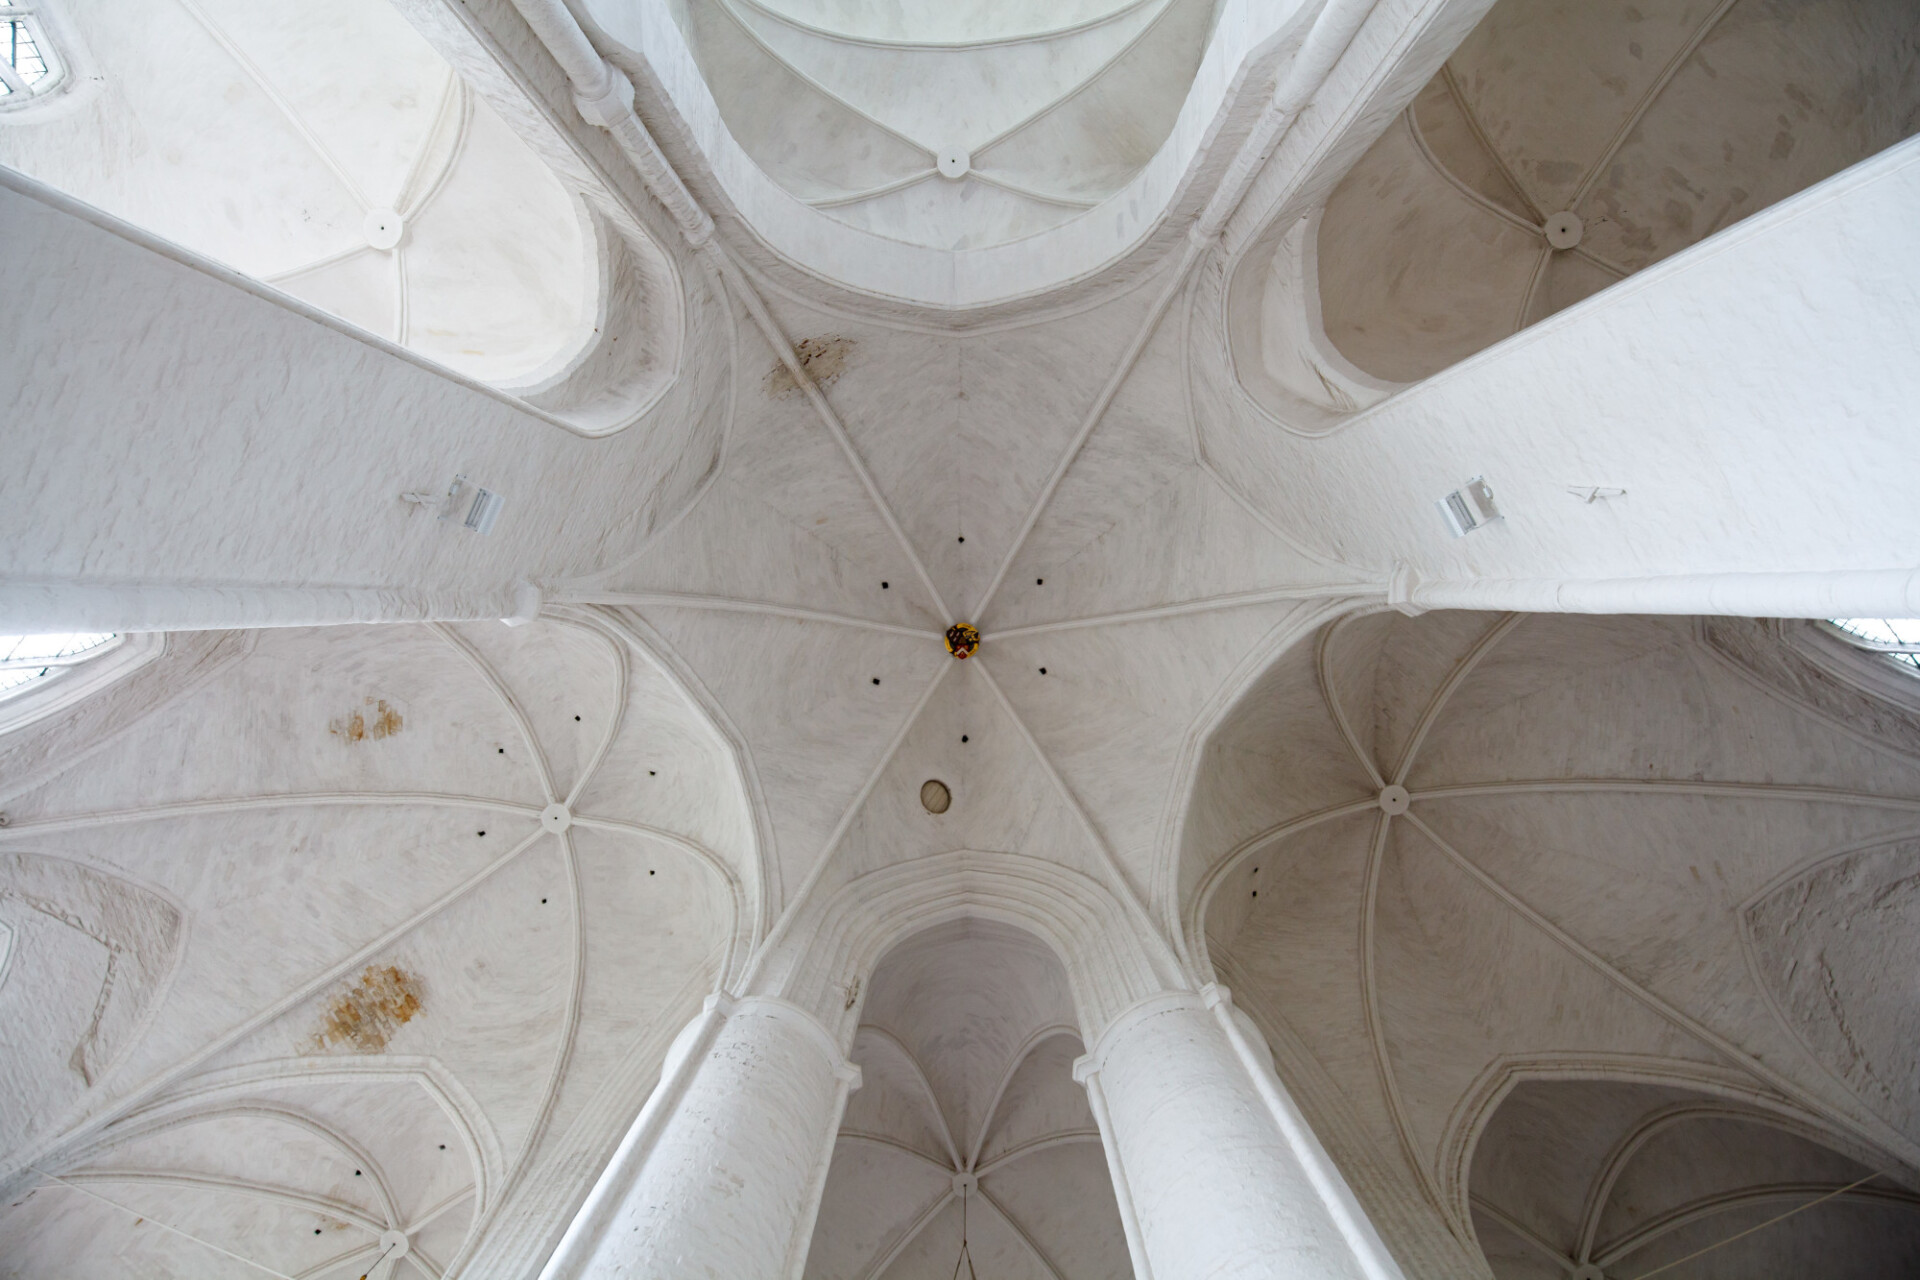 Cathedral interior design